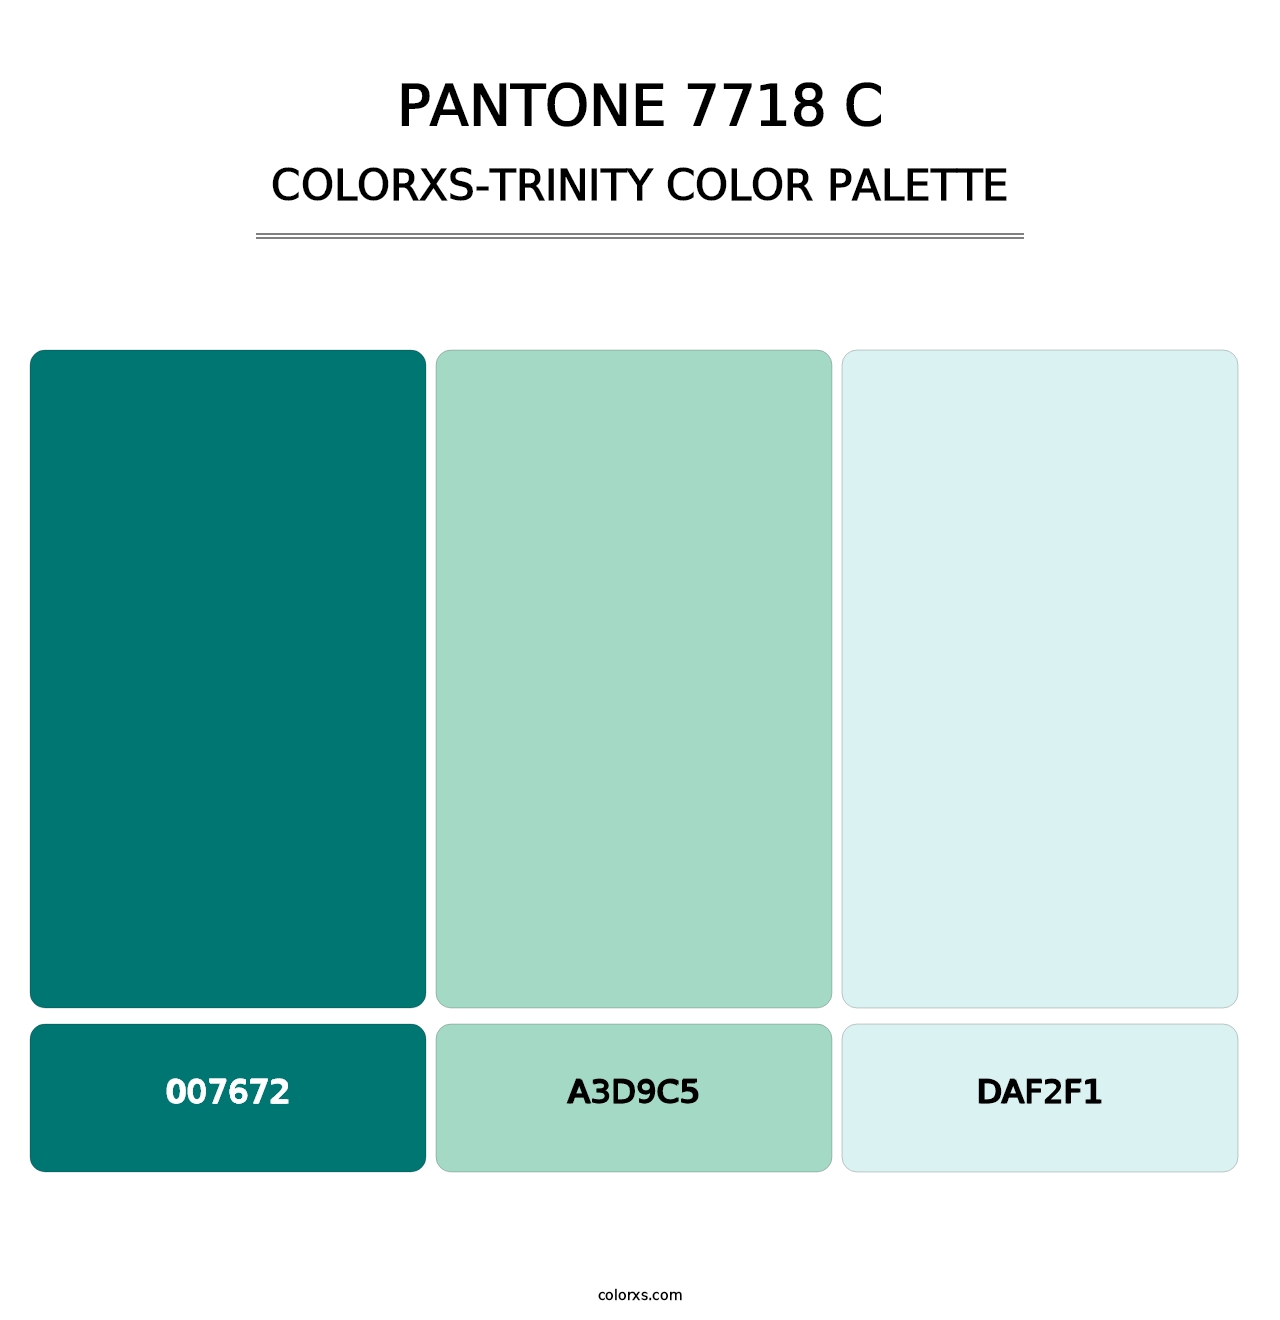 PANTONE 7718 C - Colorxs Trinity Palette